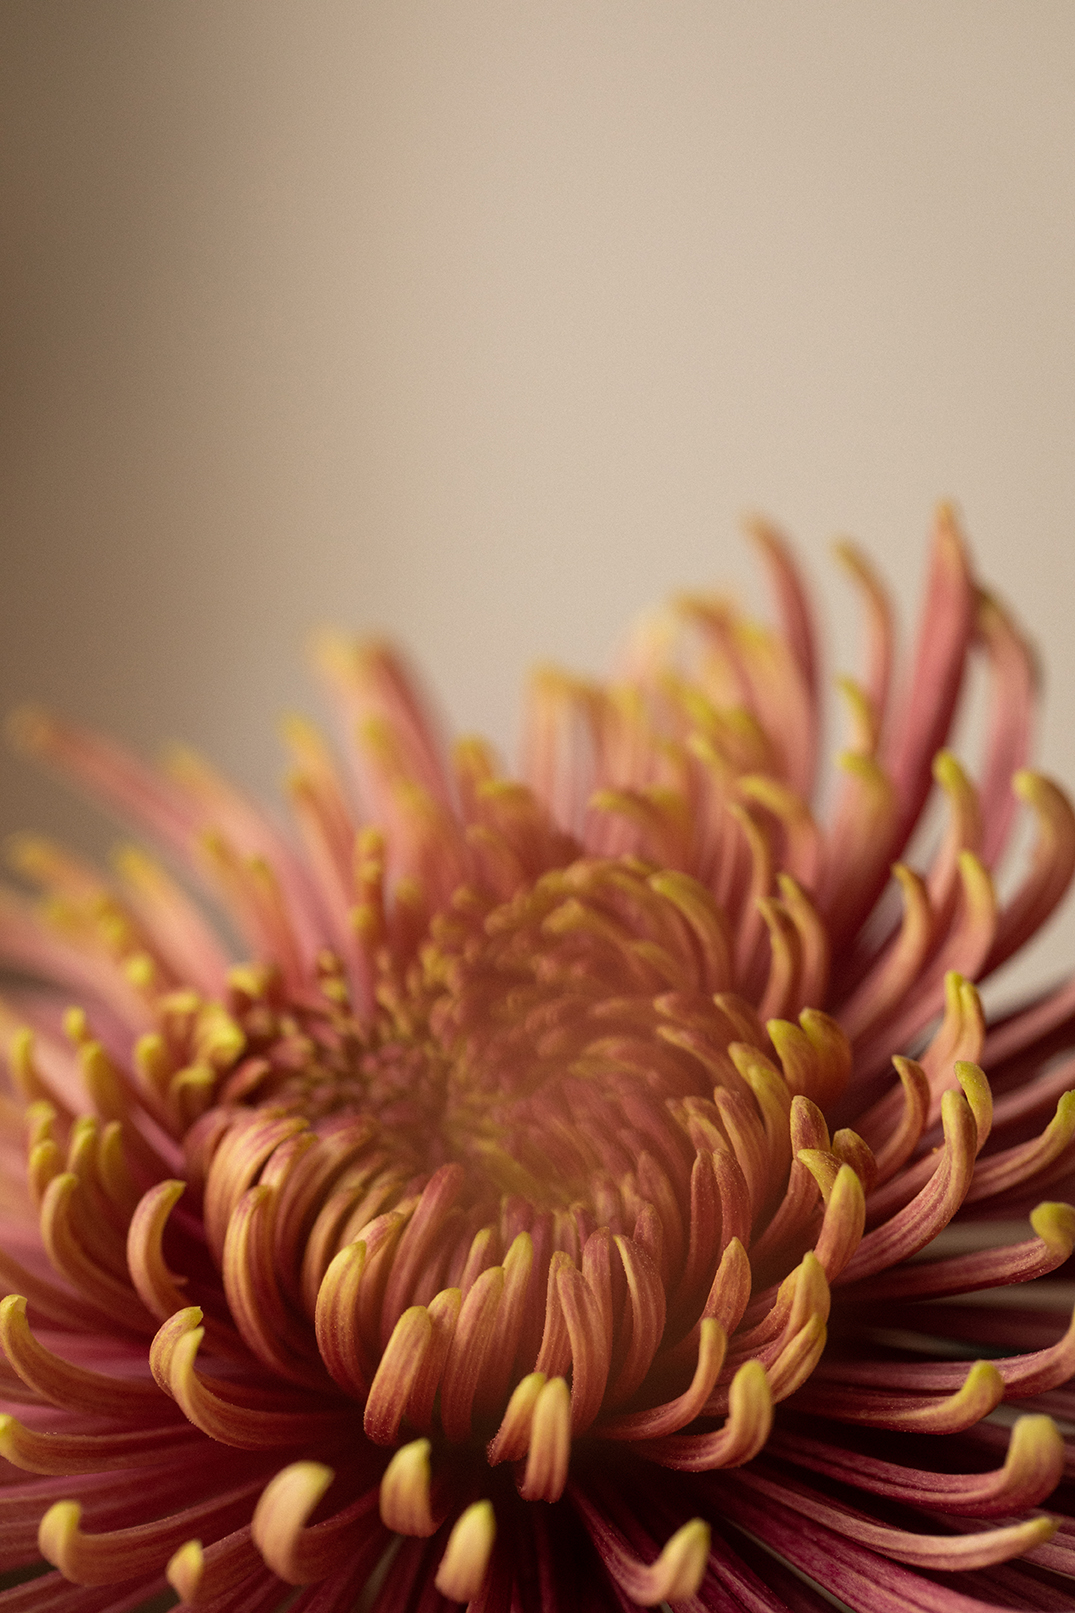 Pink and yellow chrysanthemum close up